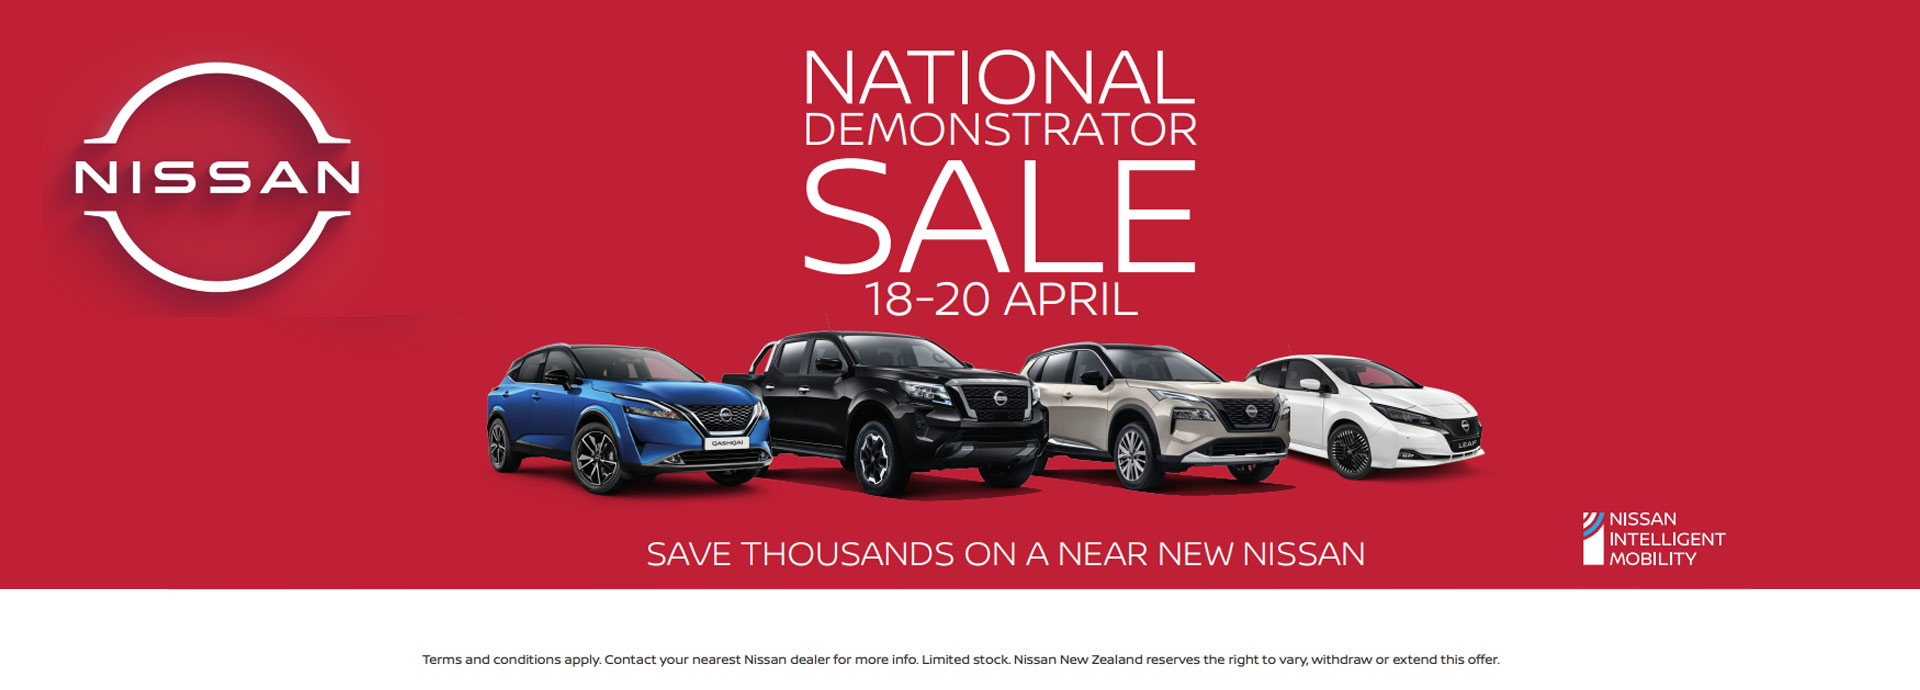 Nissan Demonstrator Sale 